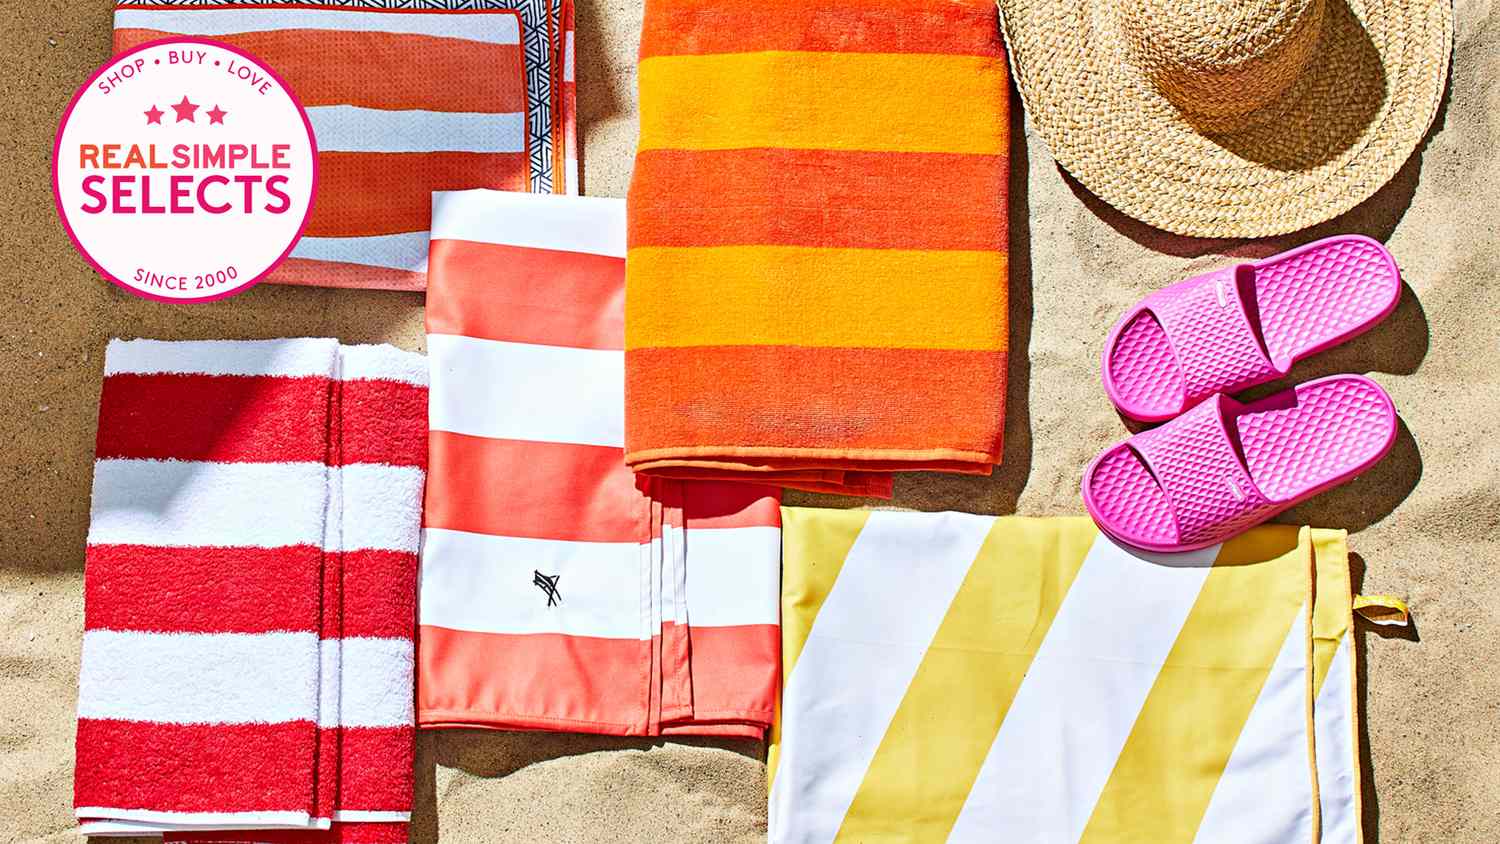 Cotton Cabana Stripe Beach Towel 4 Pack, Ink Blue Soft Absorbent Quick Dry Towel Set Bondi Collection.